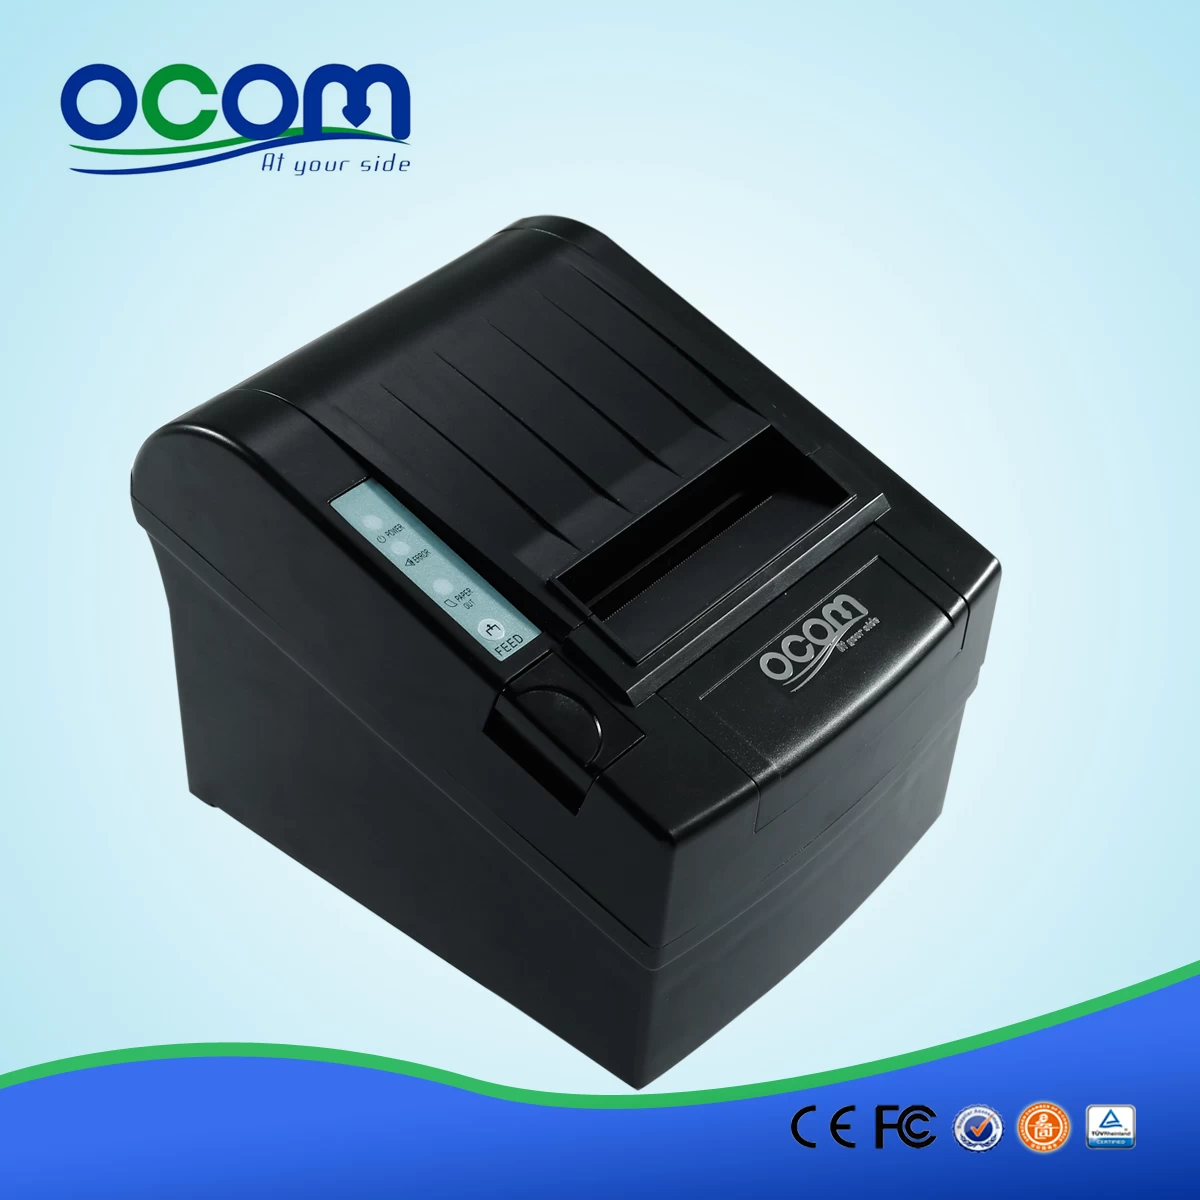 3 Inch Wifi Thermal Receipt Printer OCPP-806-W